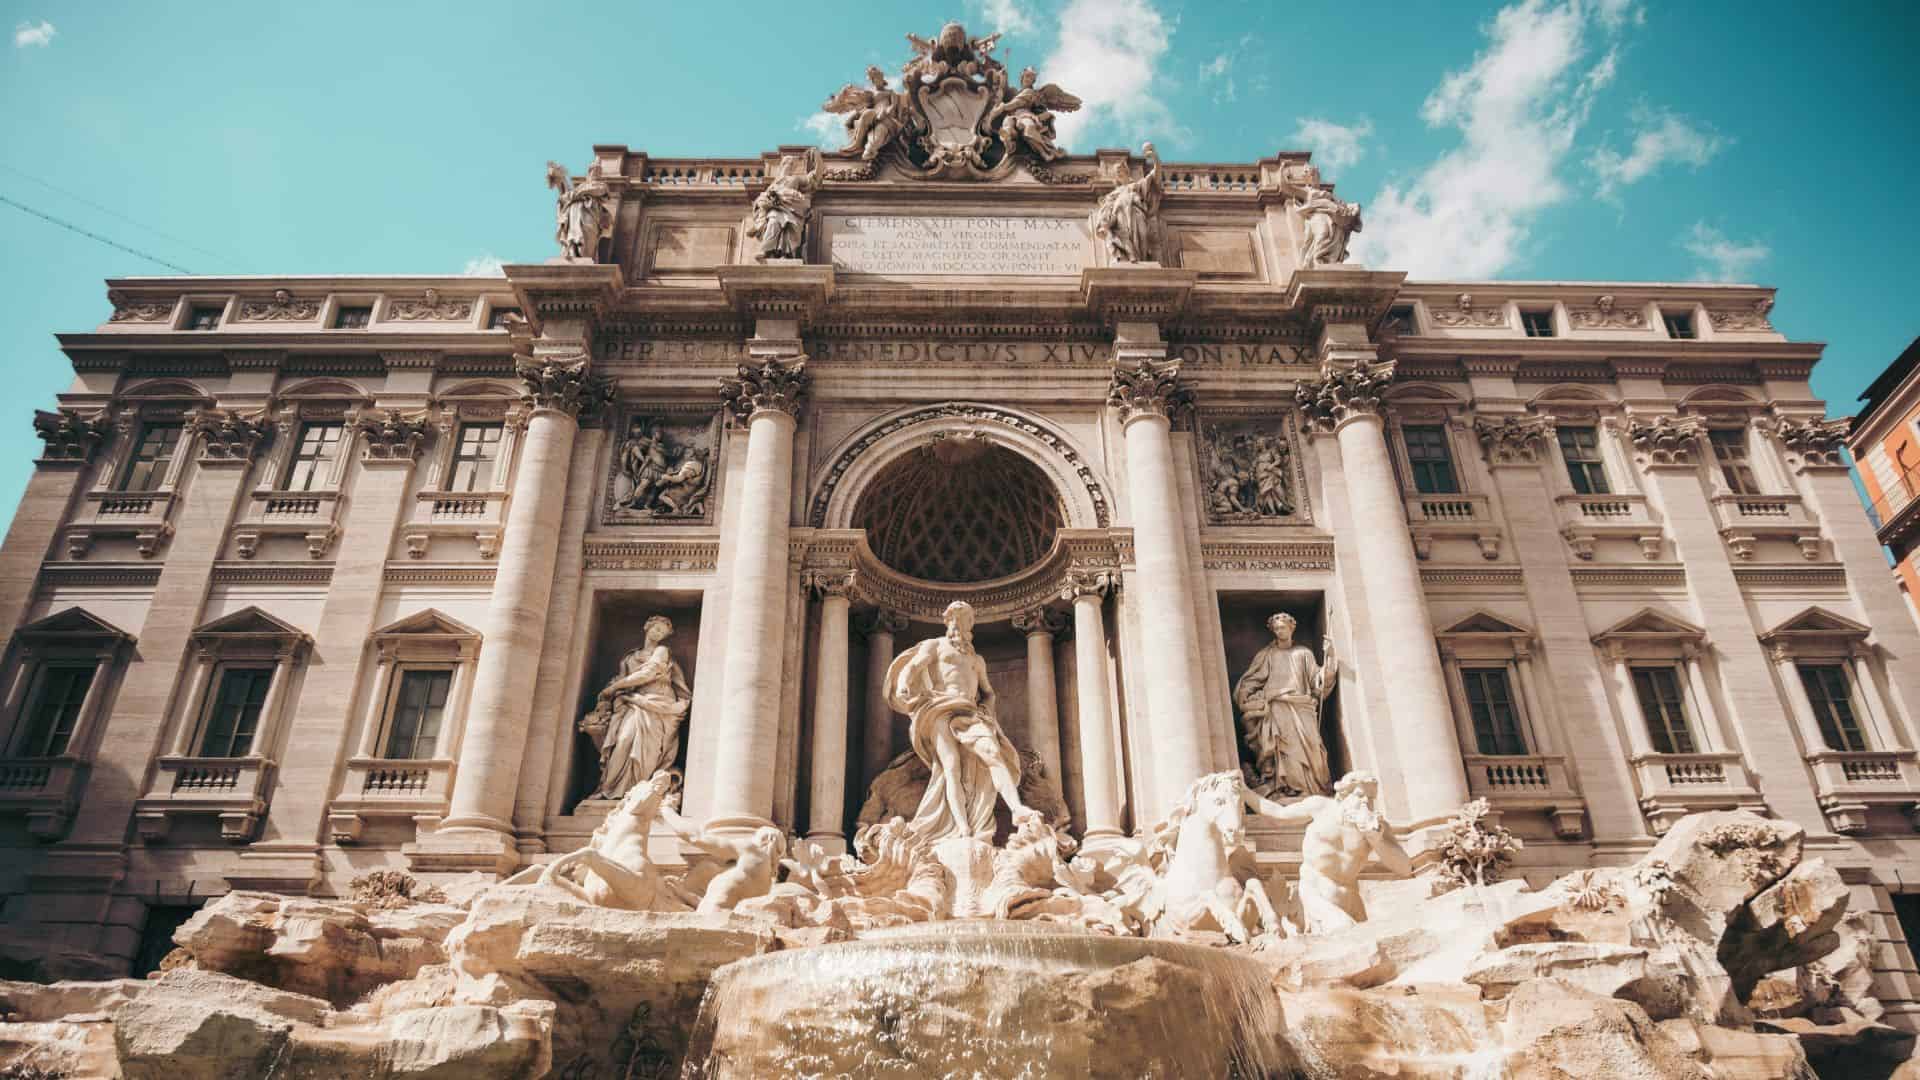 La fontana di trevi a Roma